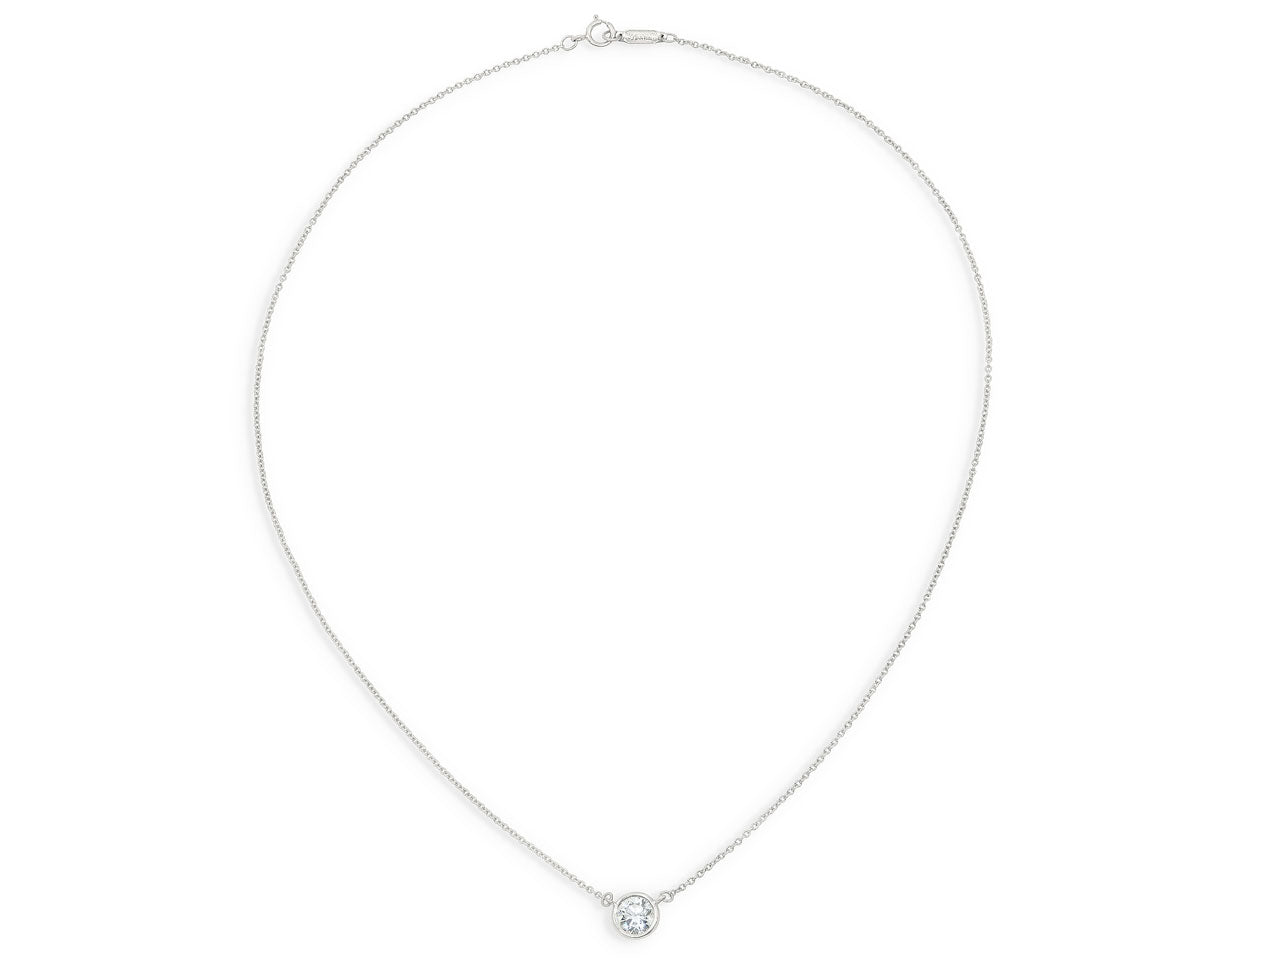 Tiffany & Co. Diamond Solitaire Pendant, 0.92 Carats, in Platinum